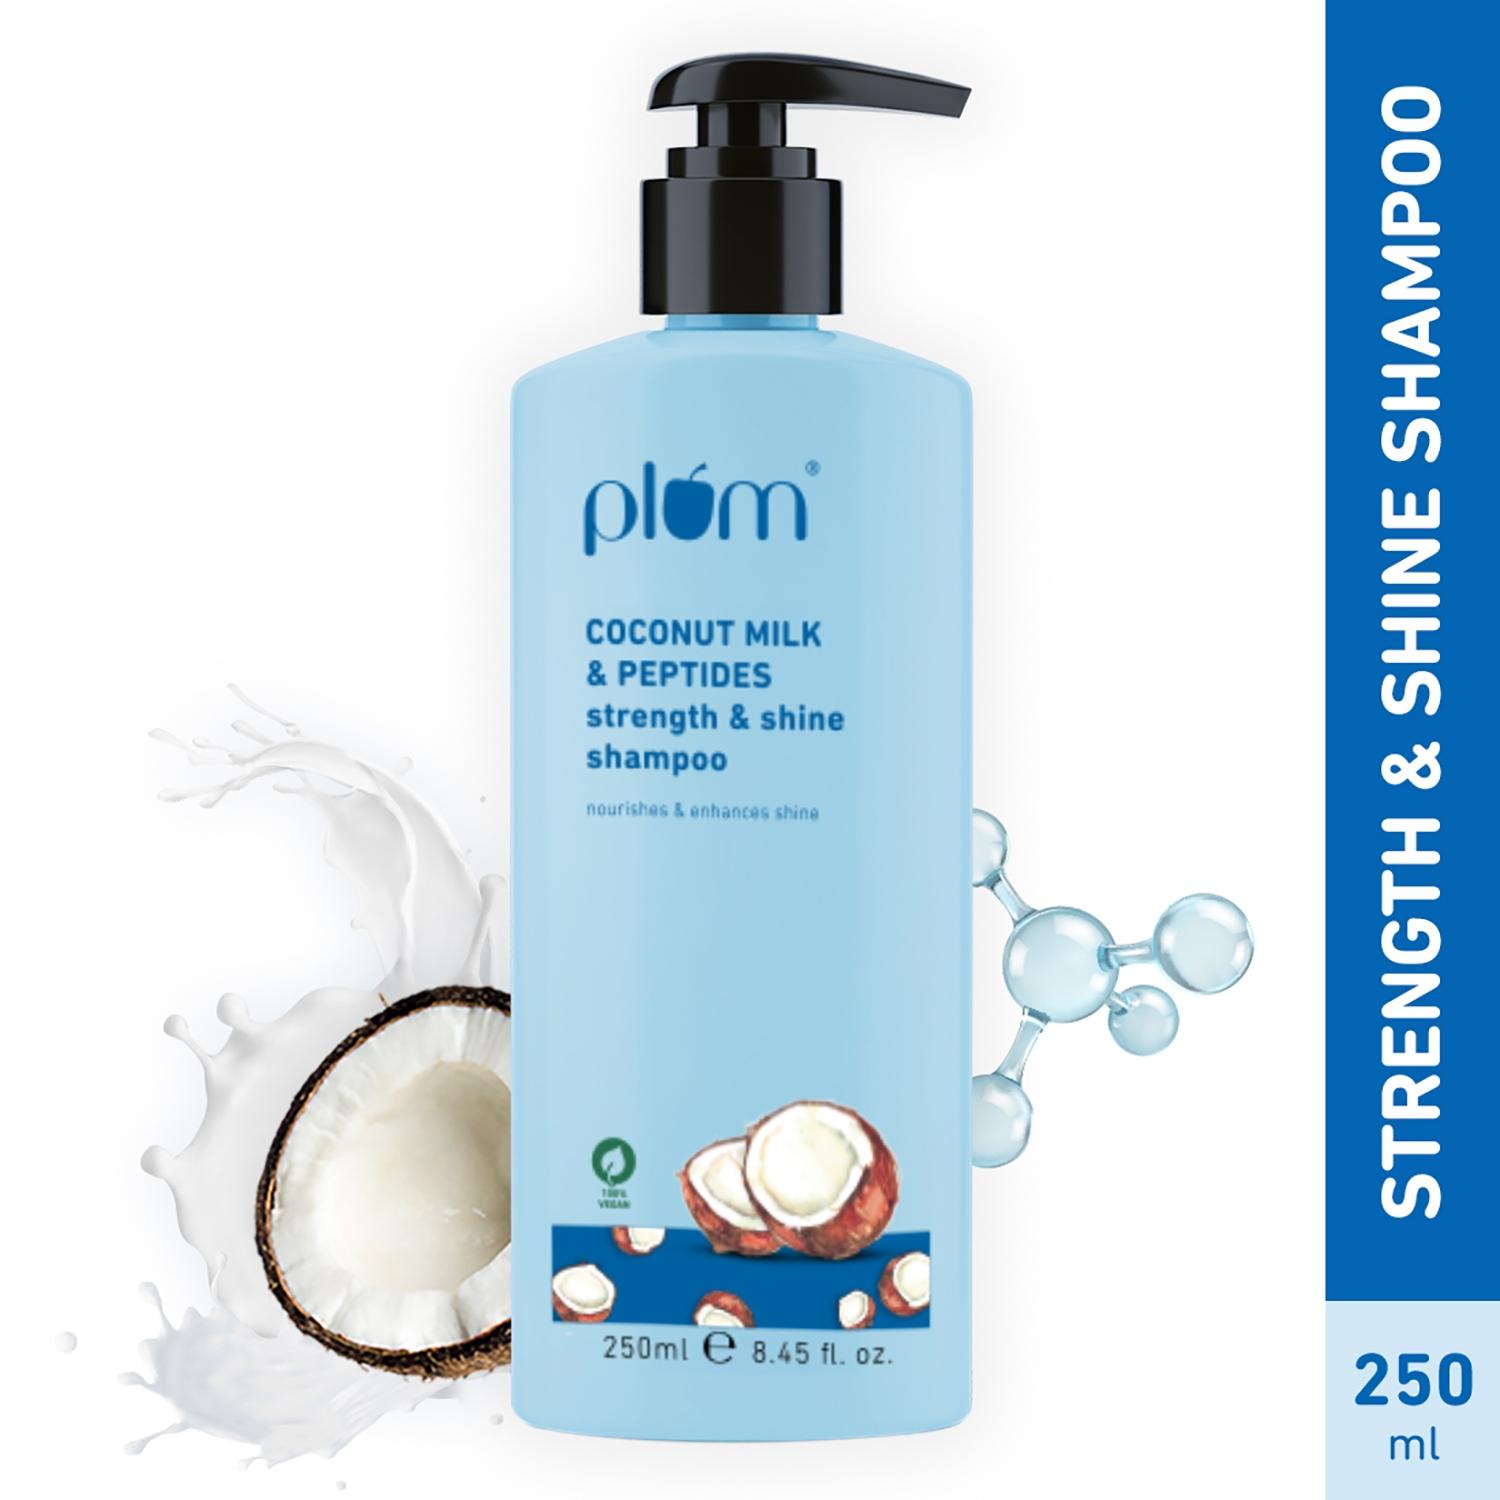 plum coconut milk & peptides strength & shine shampoo for dull & dry hair (250ml)